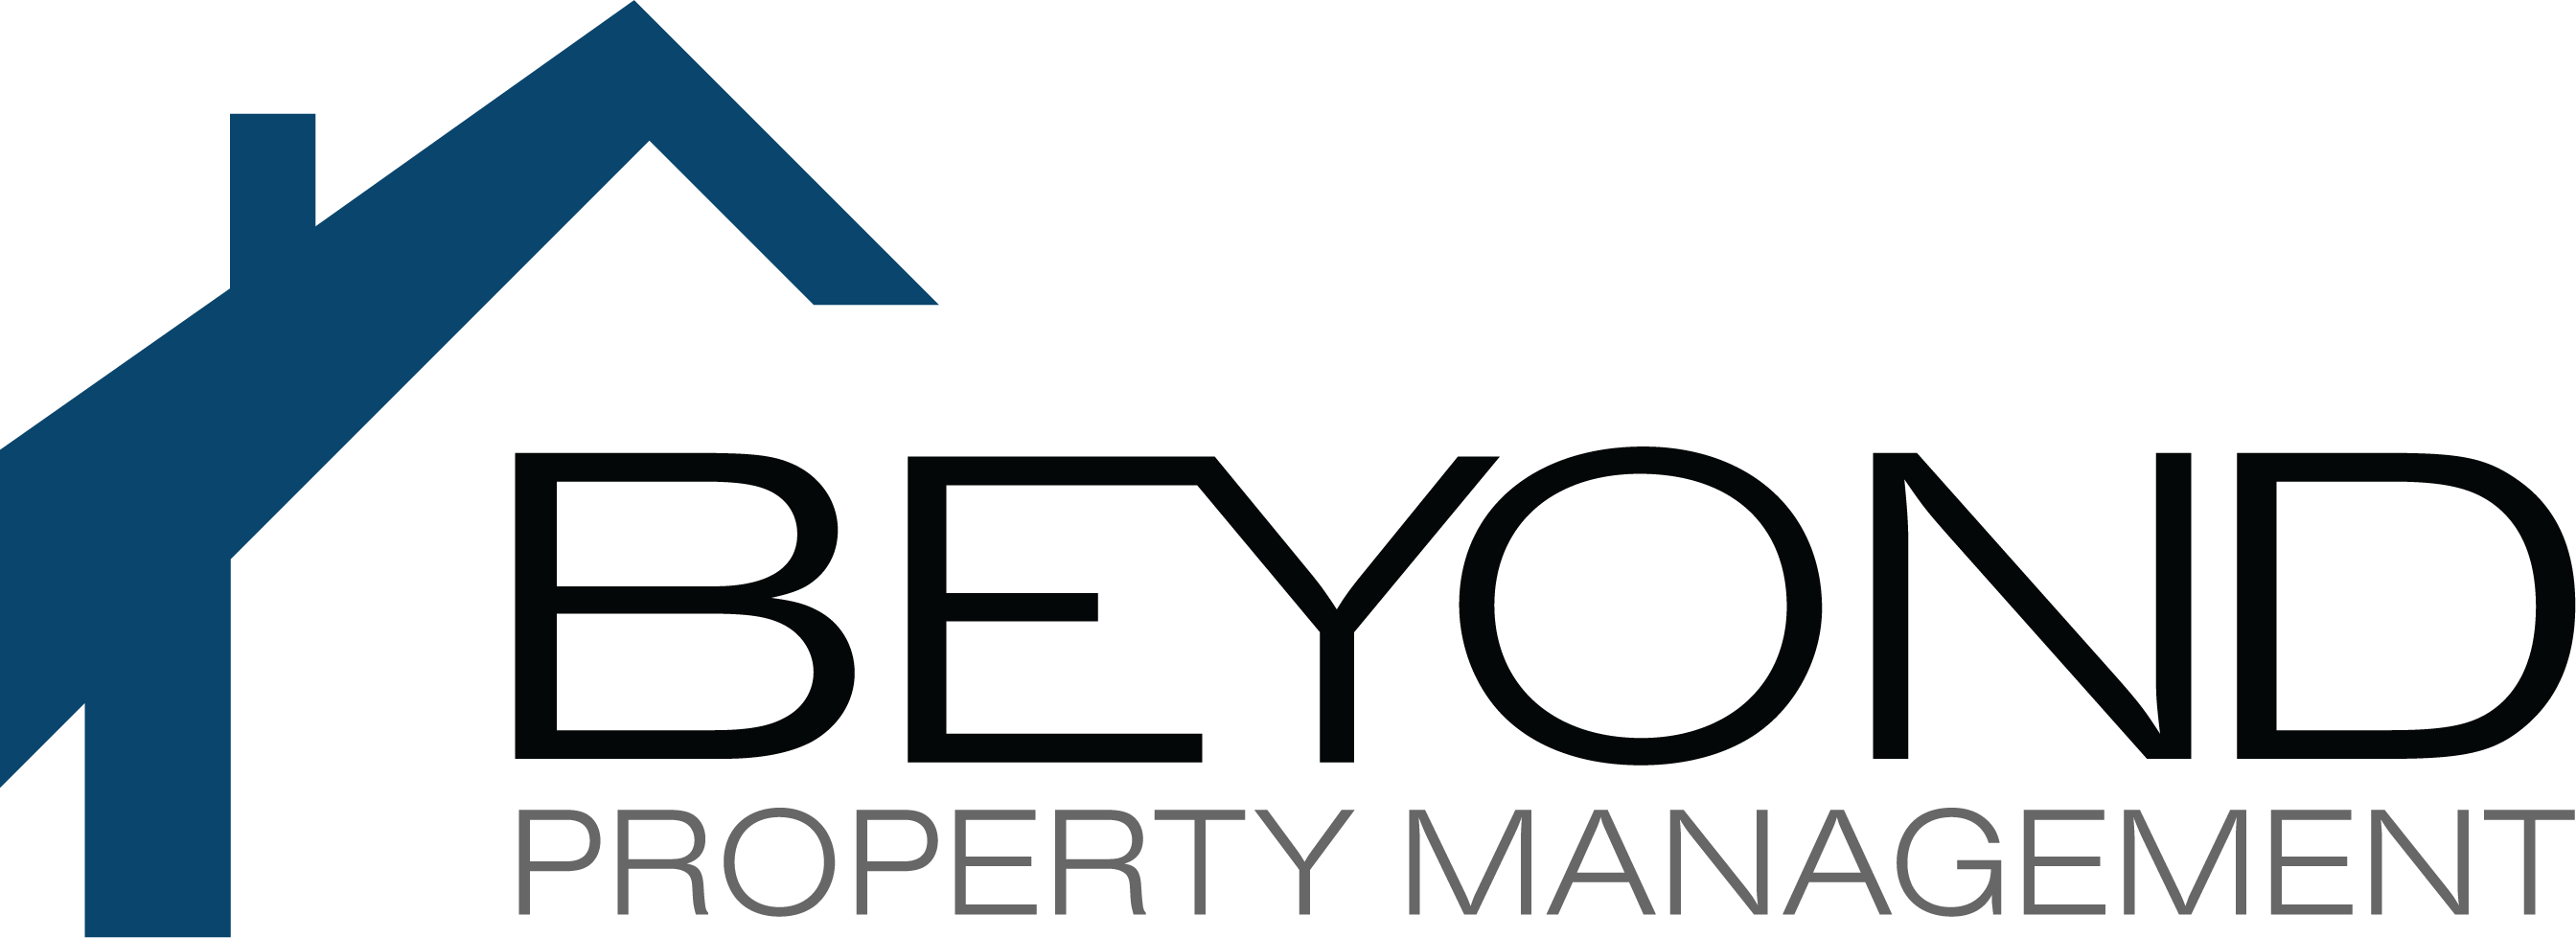 clipart key property management